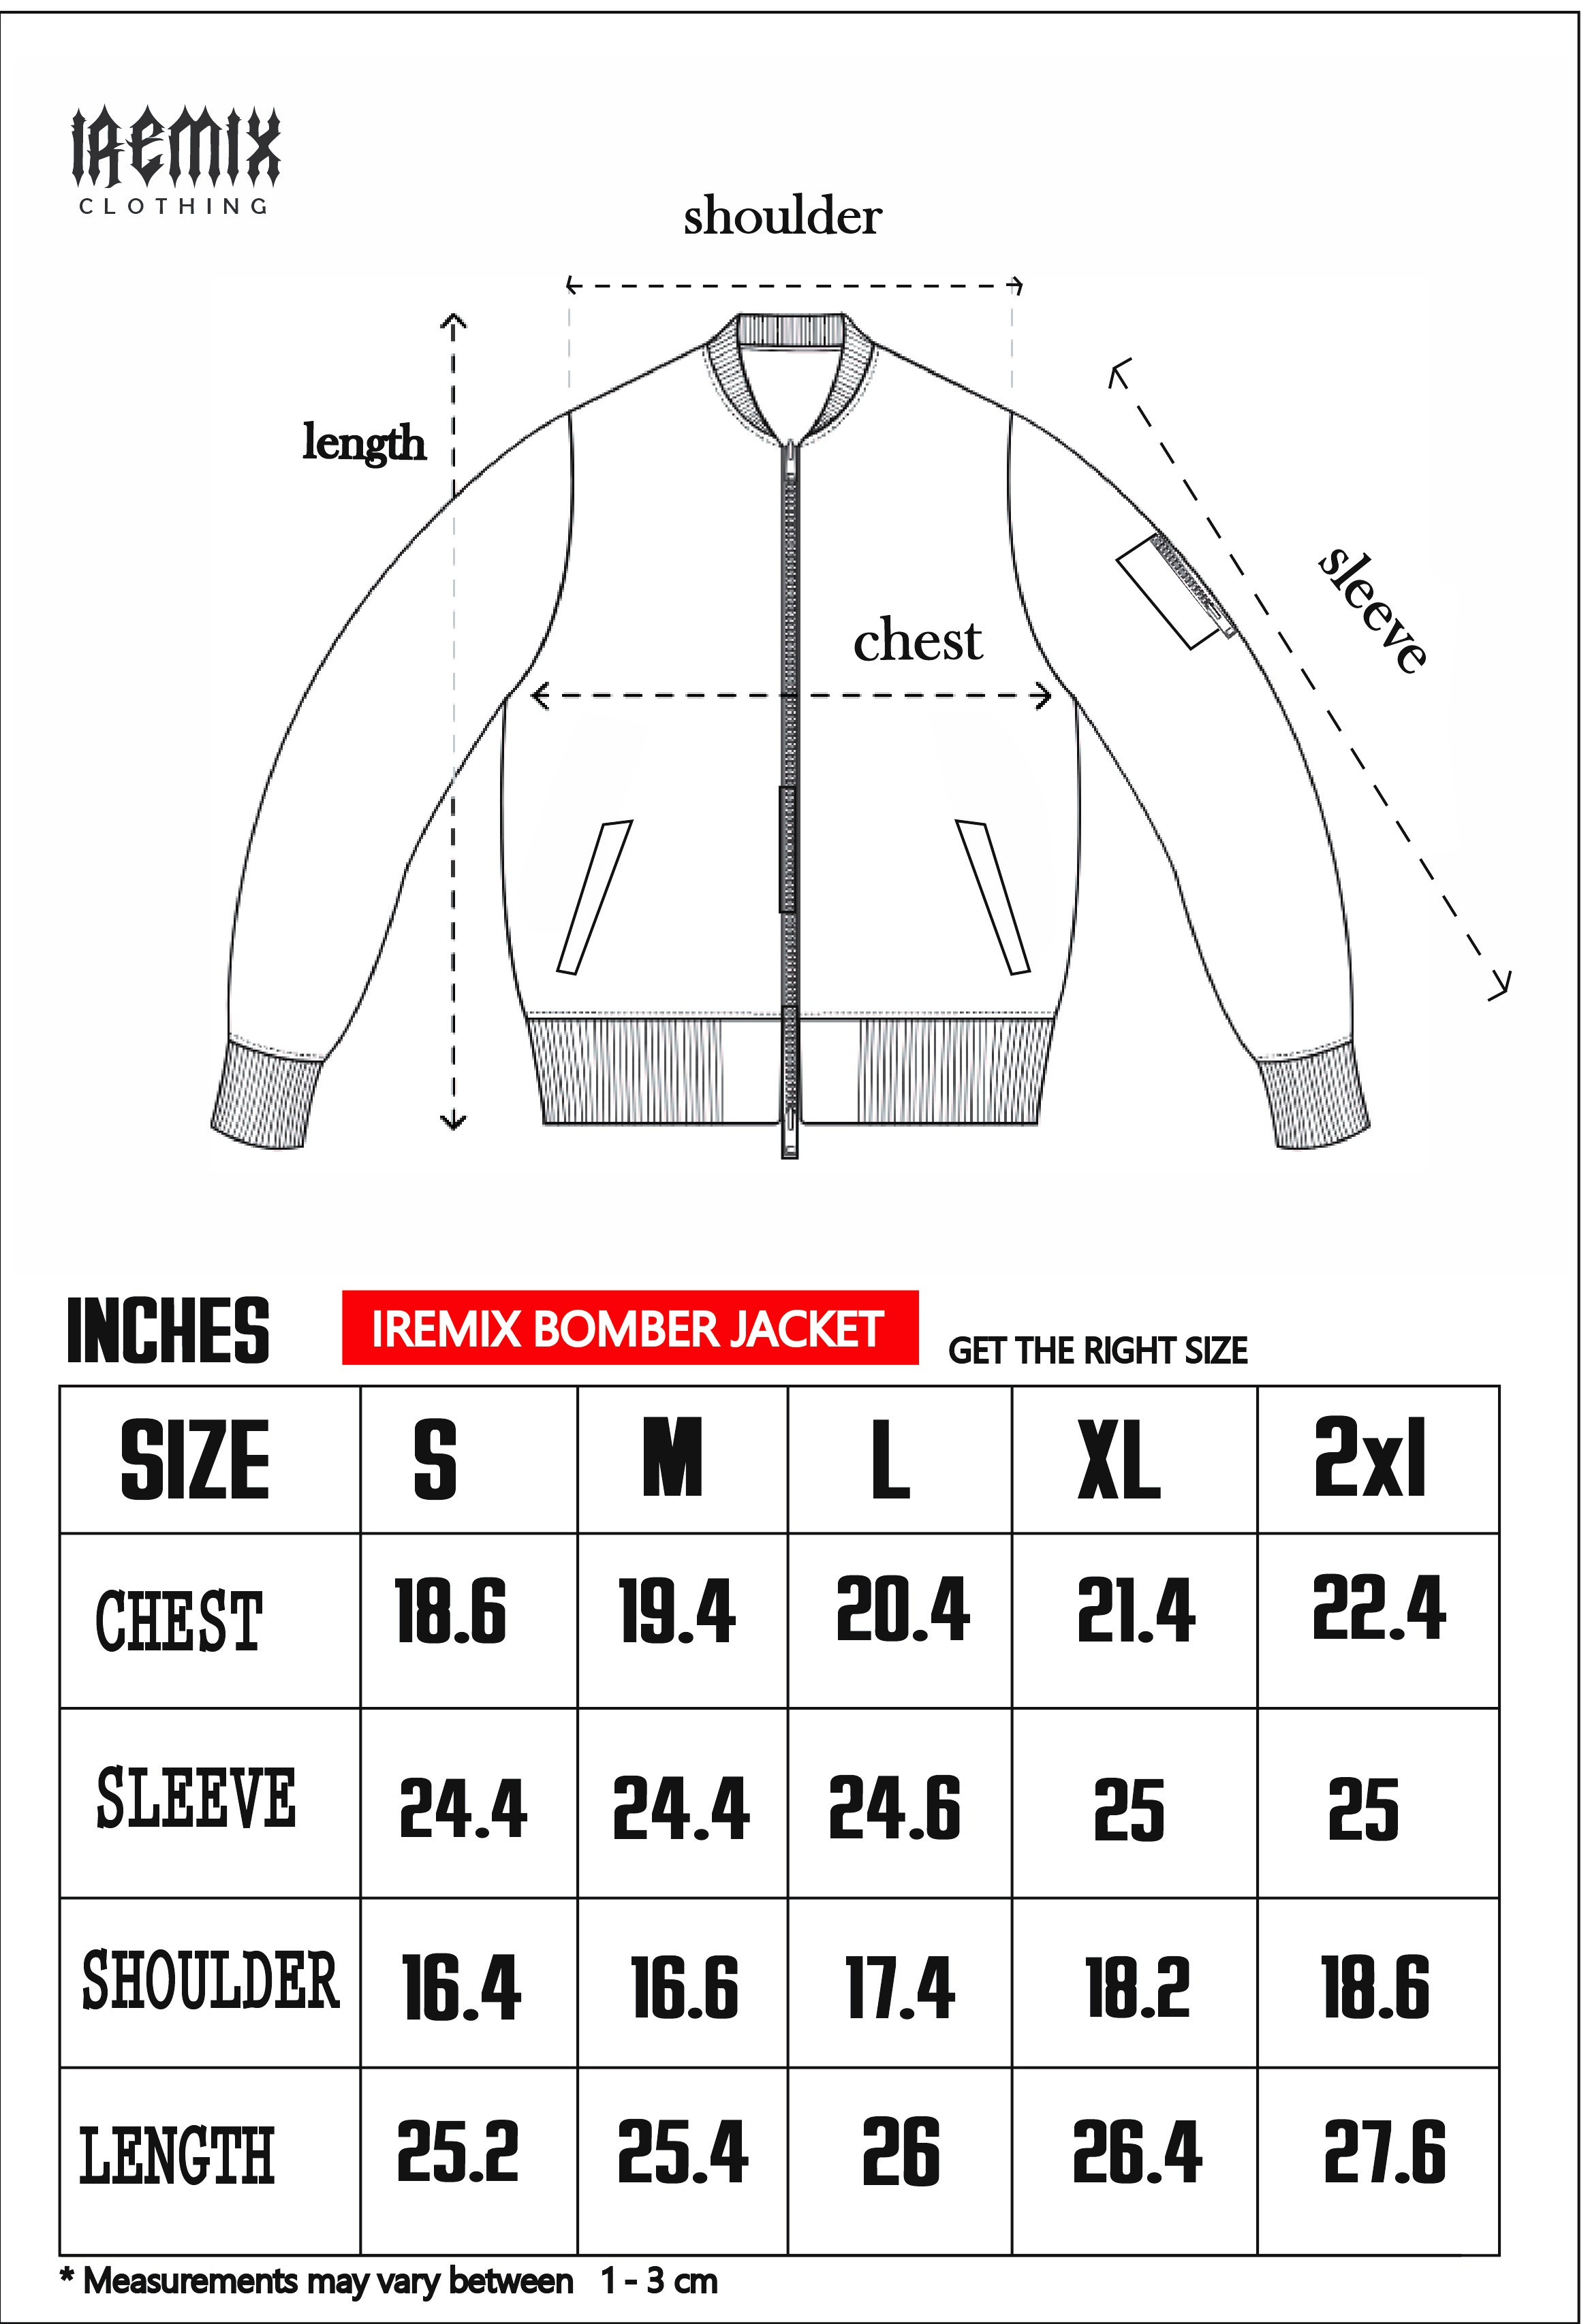 size-guide-iremix-clothing